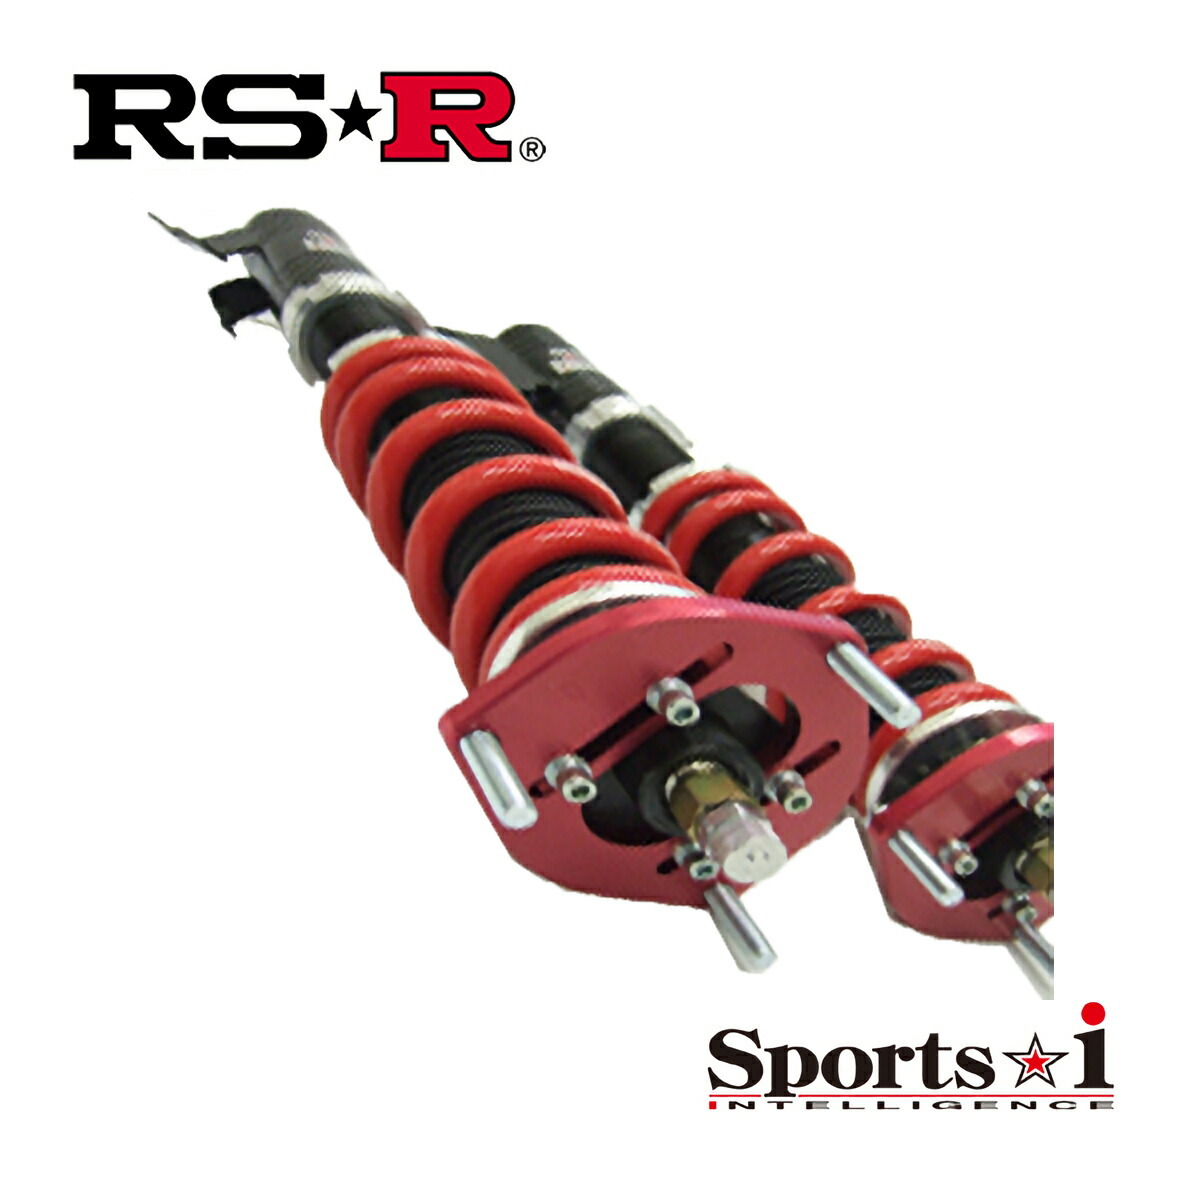 RSR シルビア S13 車高調 リア車高調整 全長式 NSPN060MP RS-R Sports-i PillowType スポーツi ピロータイプ_画像1